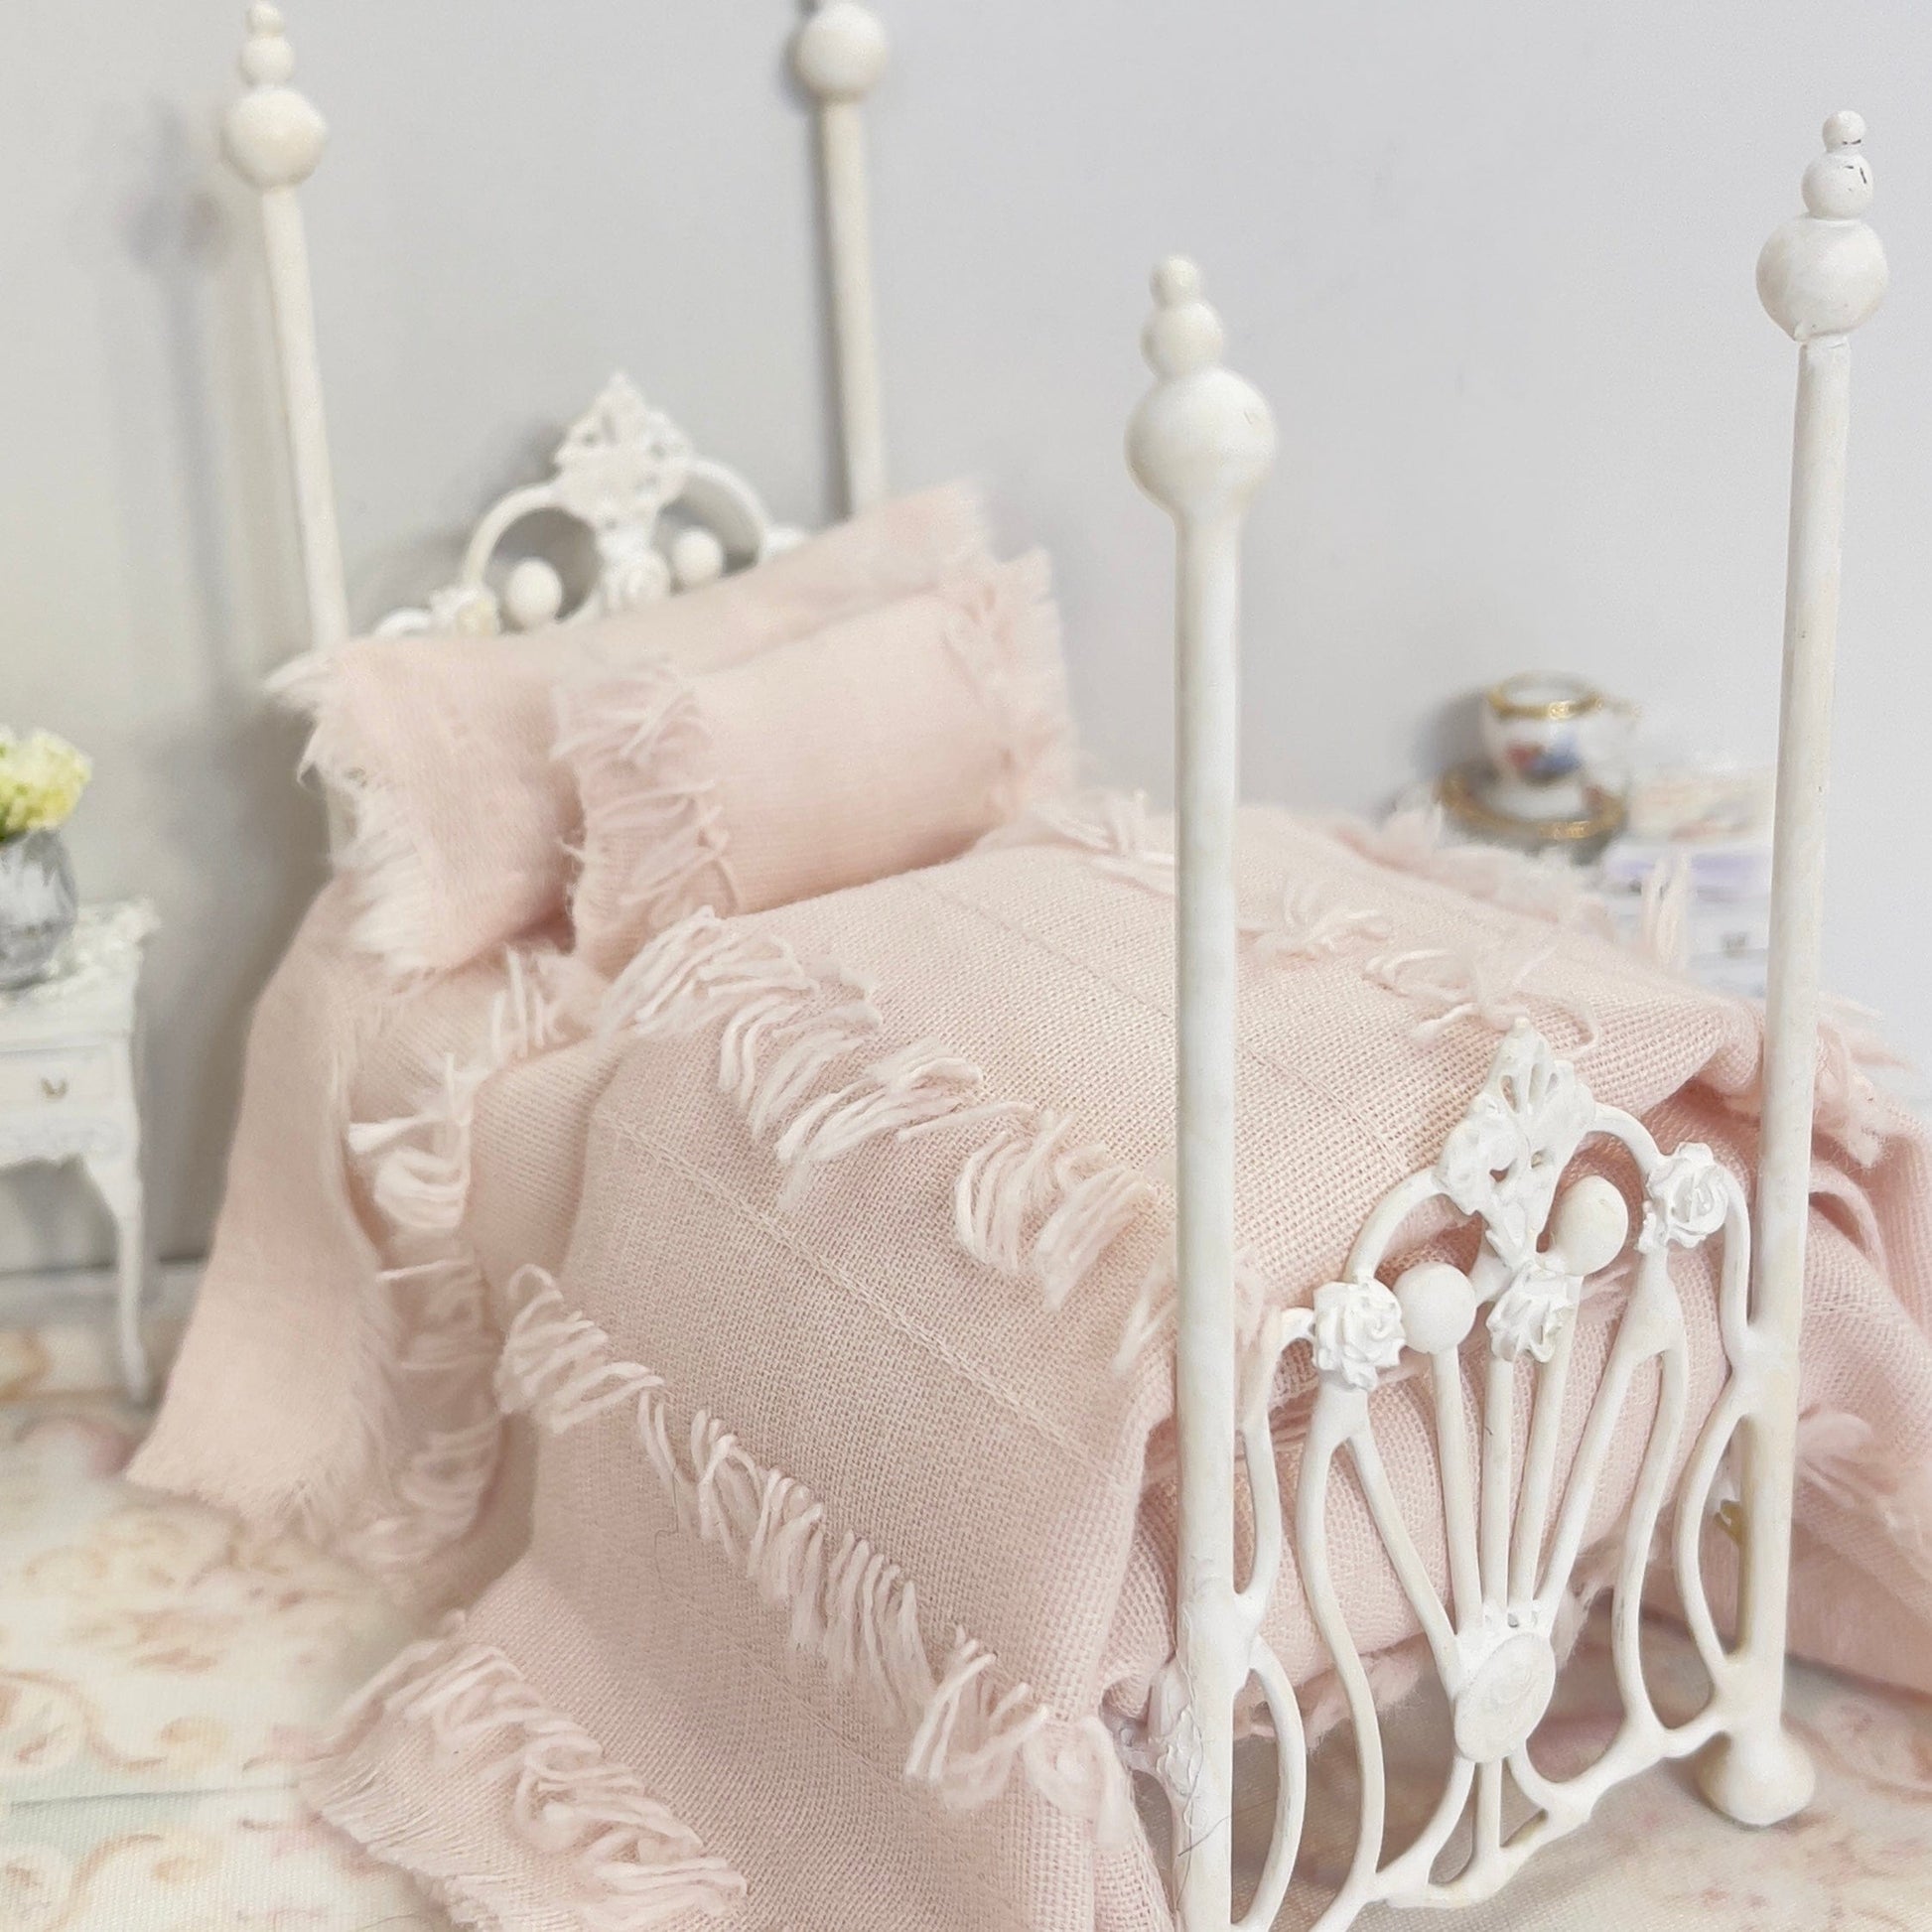 CHANTALLENA Dollhouse Accessories 1:24 Scale |Four Piece Dusty Pink Textured Cottone Dollhouse Bedding Set | Petite Dustie